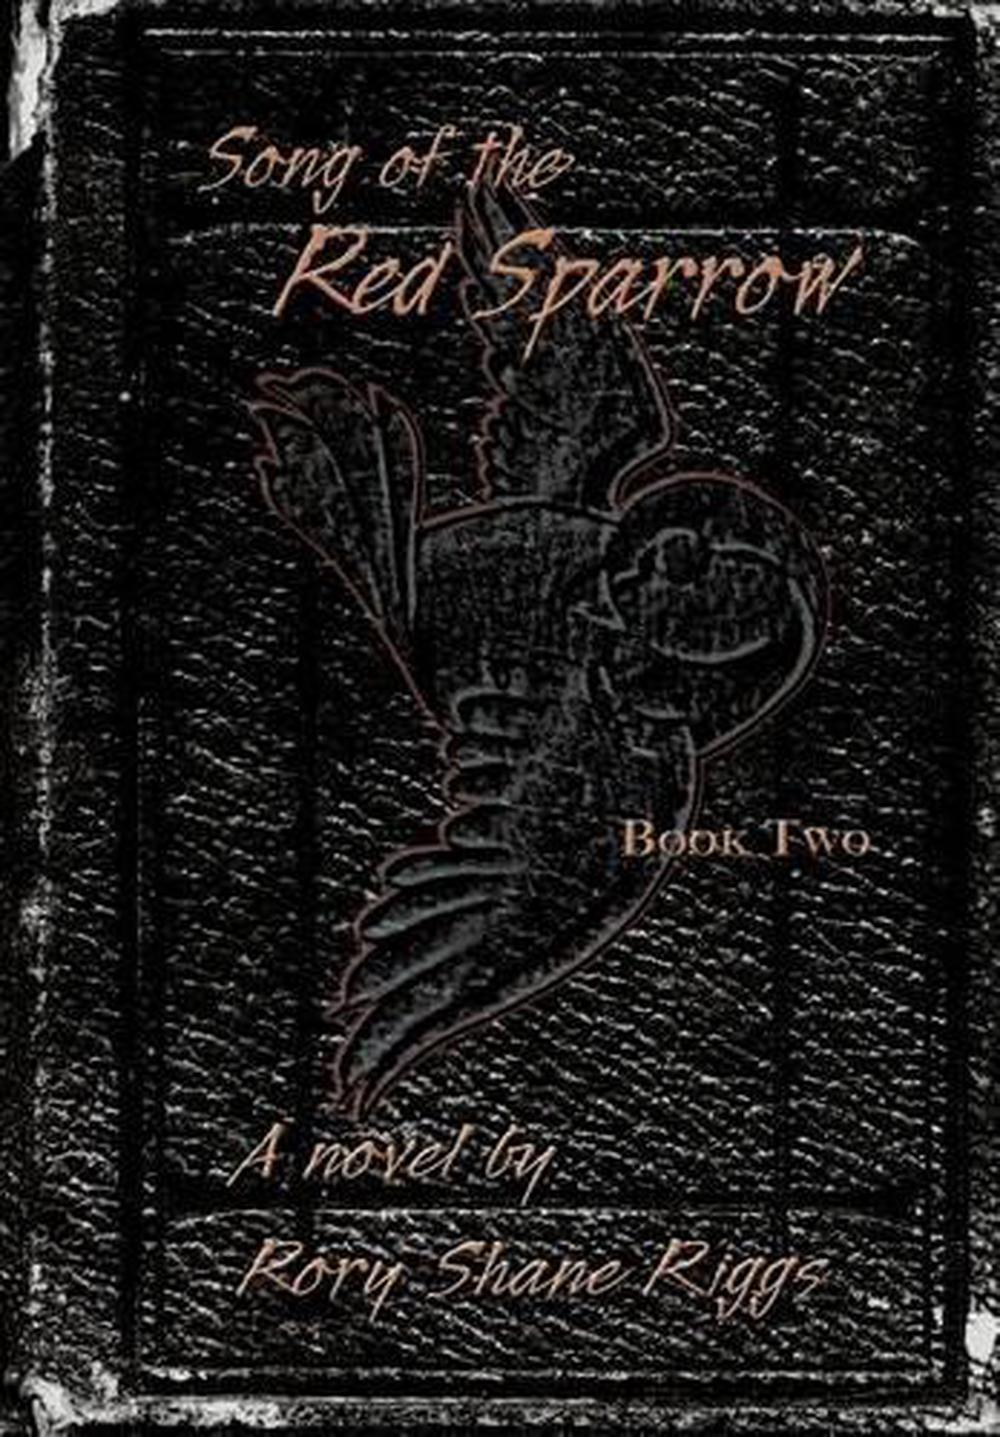 red sparrow book summary